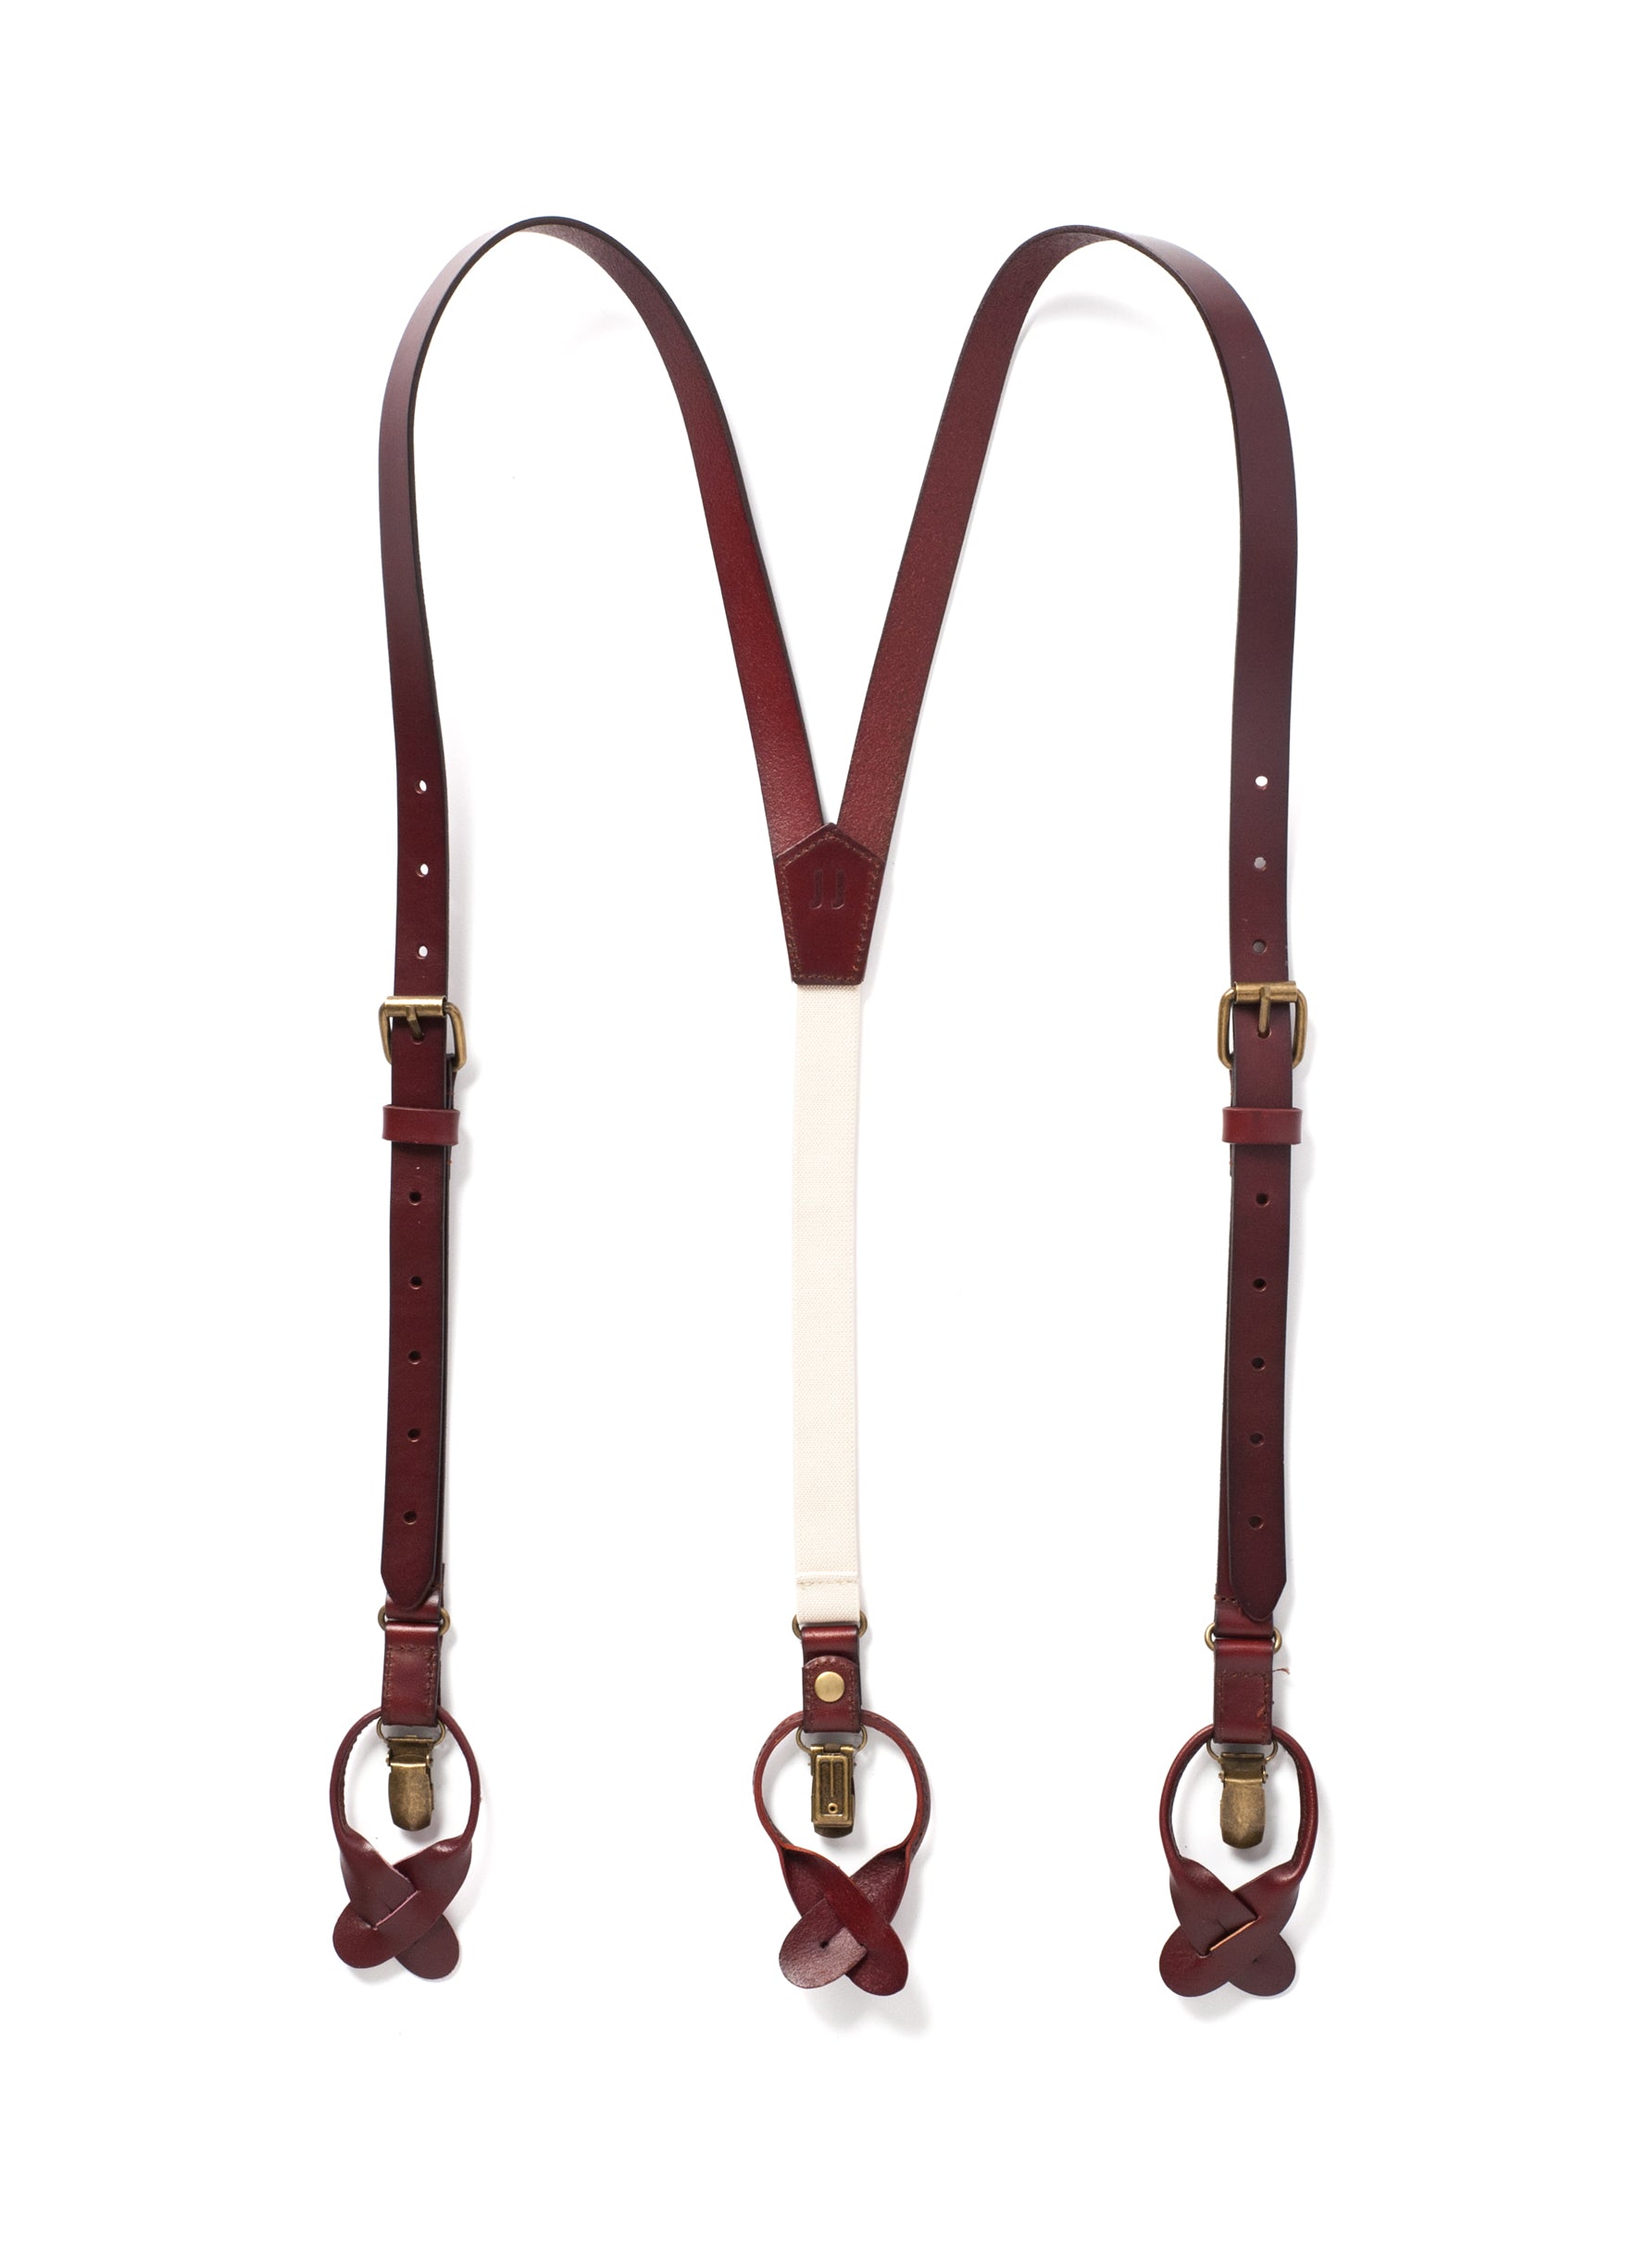 Mens Leather Suspernders - Handcrafted Brown Leather Suspenders